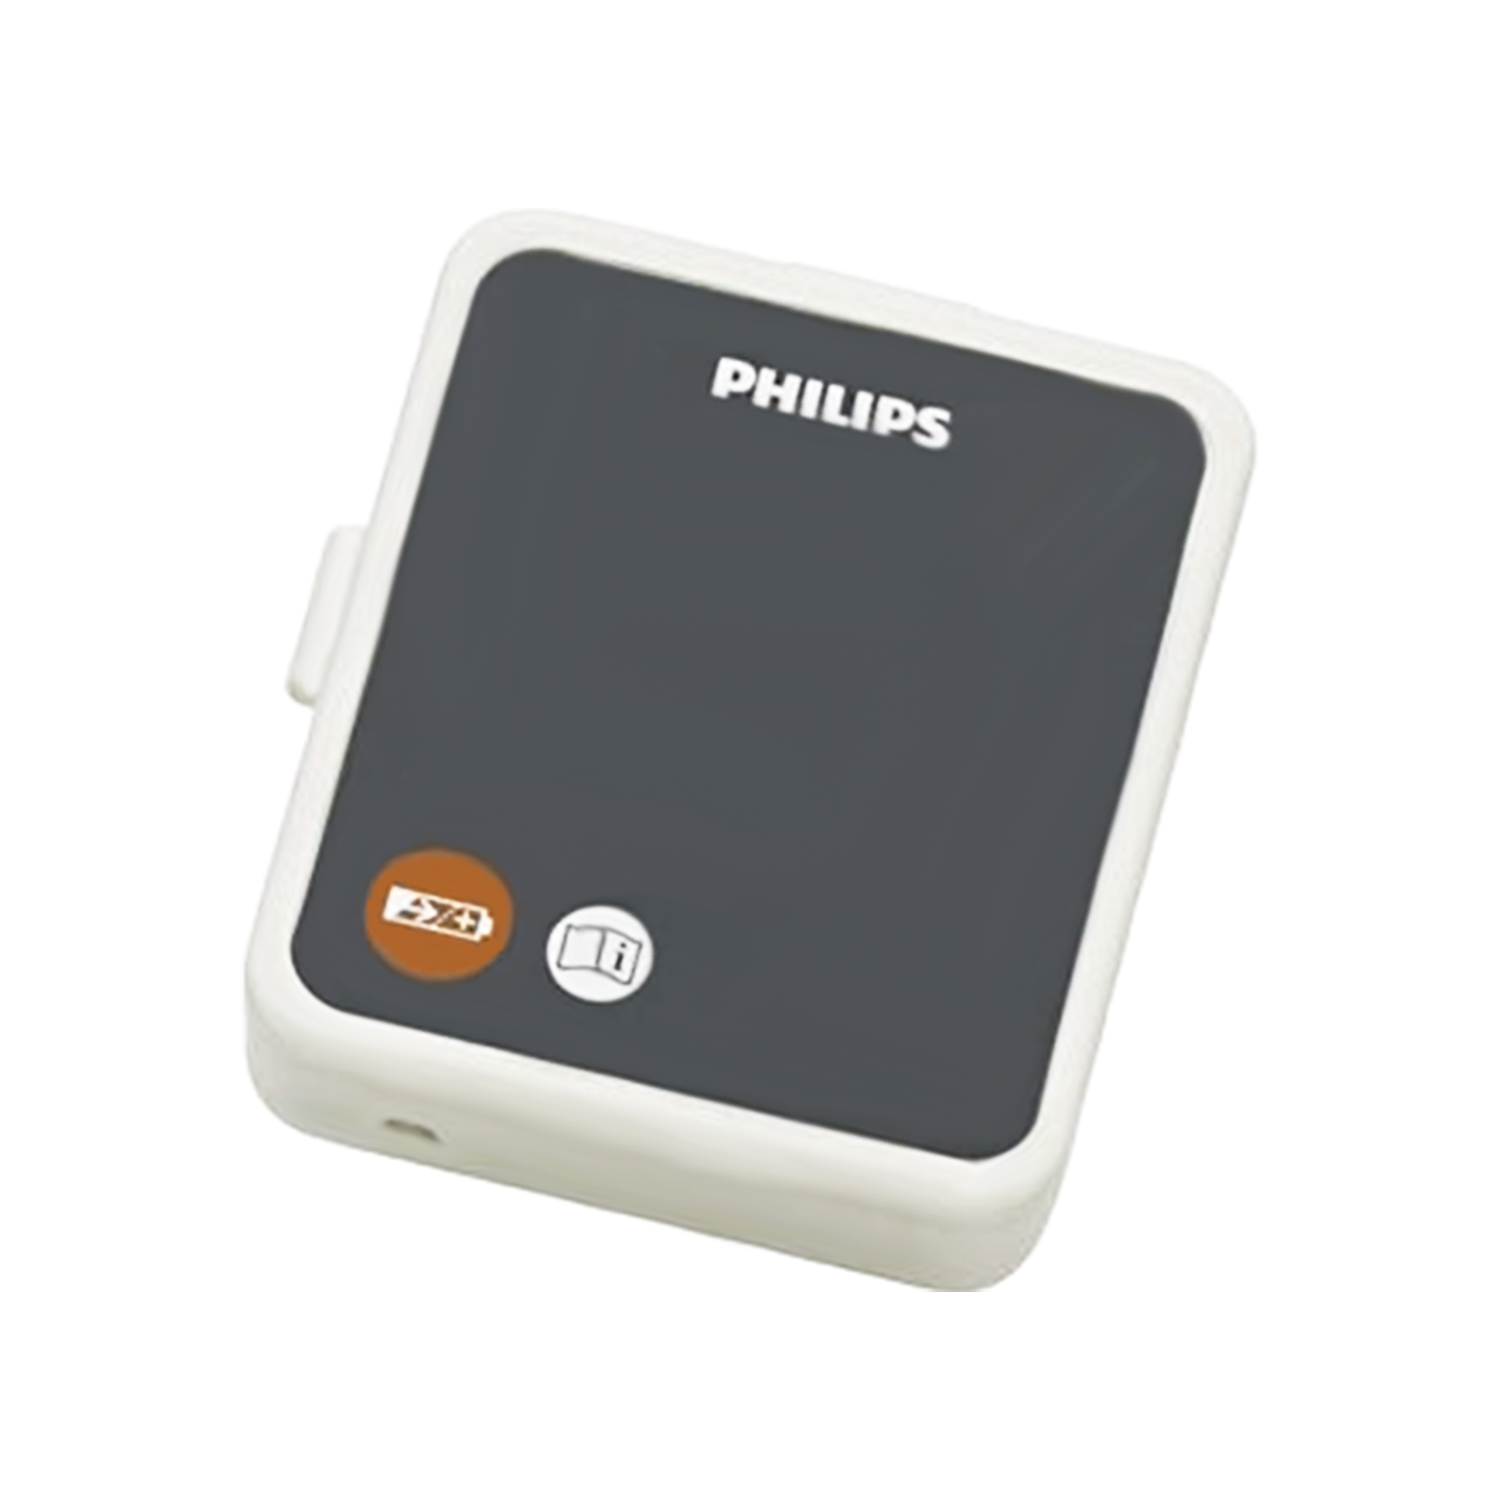 Philips – Medical Equipment Doctor